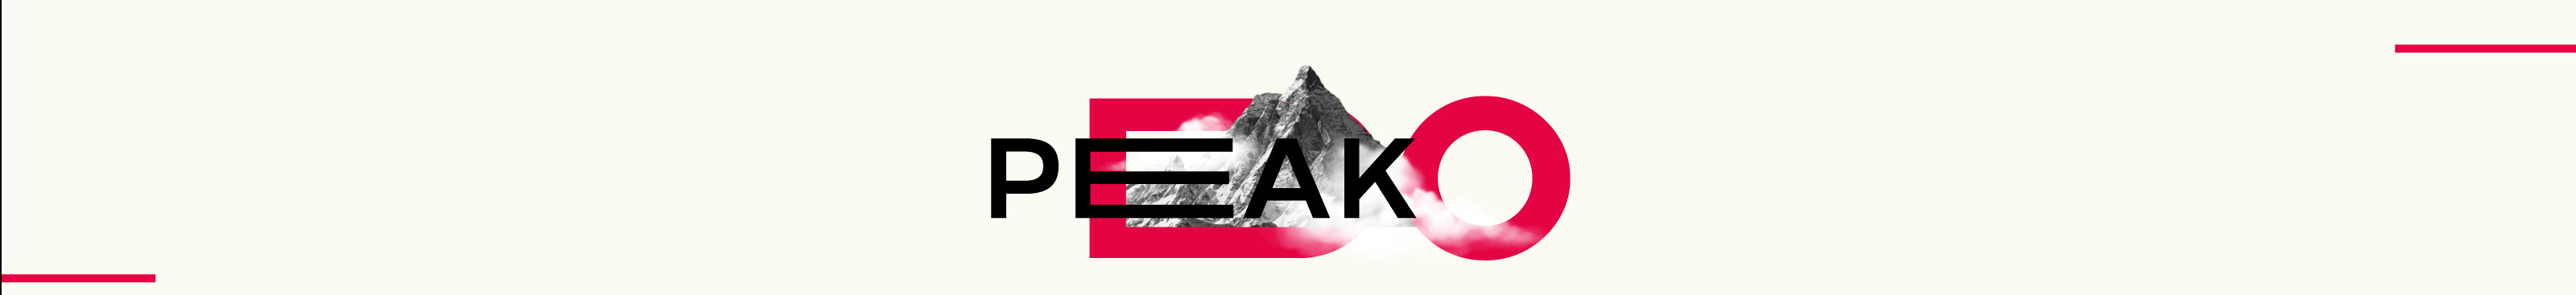 Peak Do's profile banner